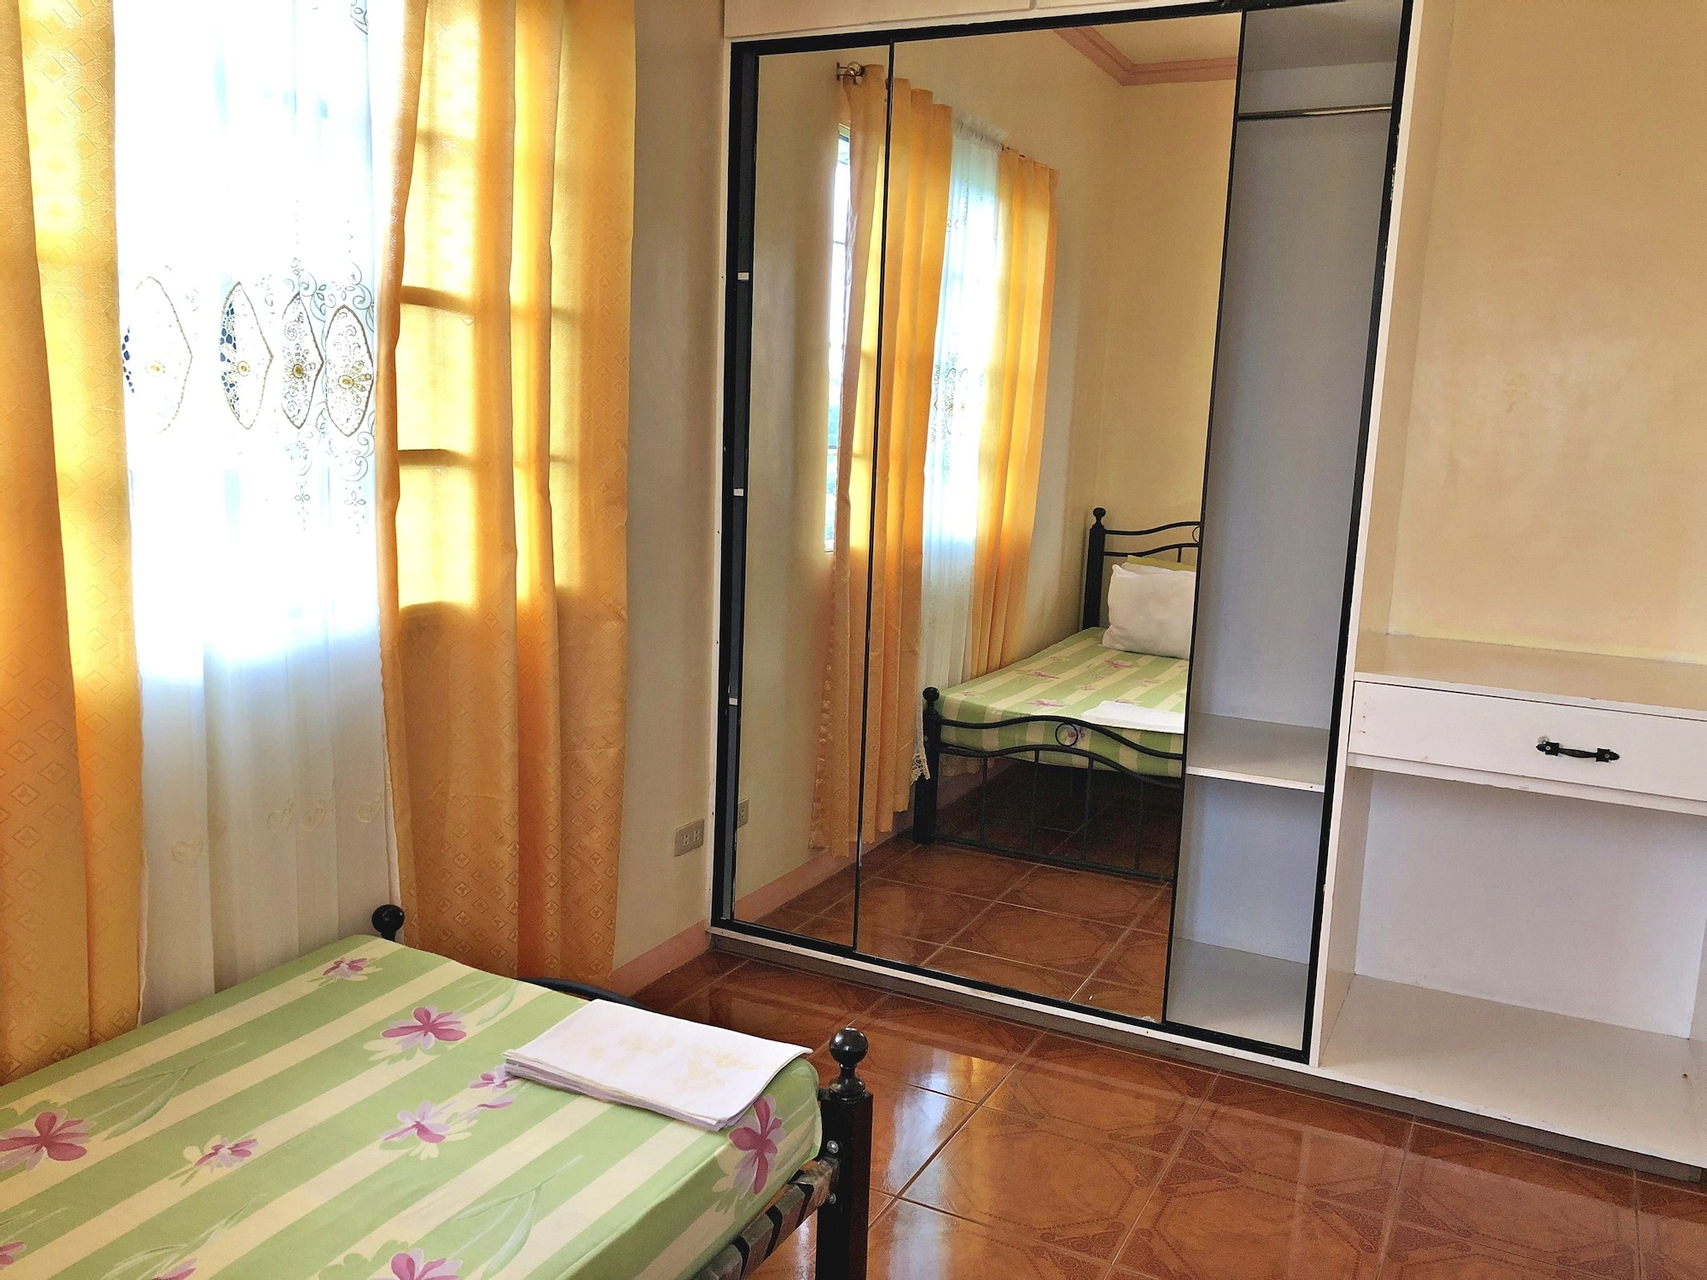 Bedroom 2, Torente Vacation House, Tagaytay City